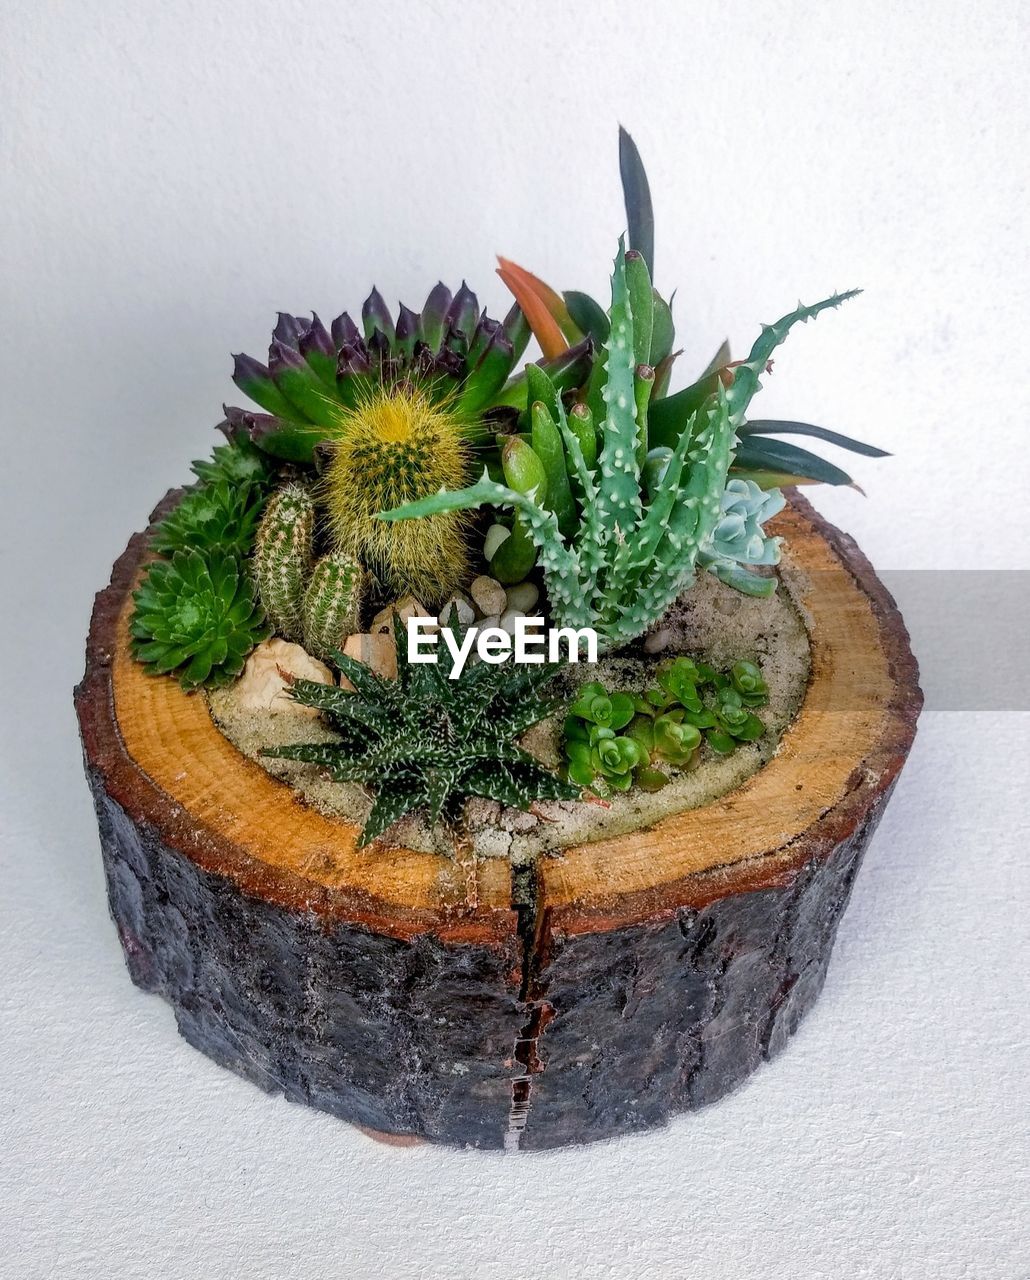 Succulent terrarium in wooden stump pot